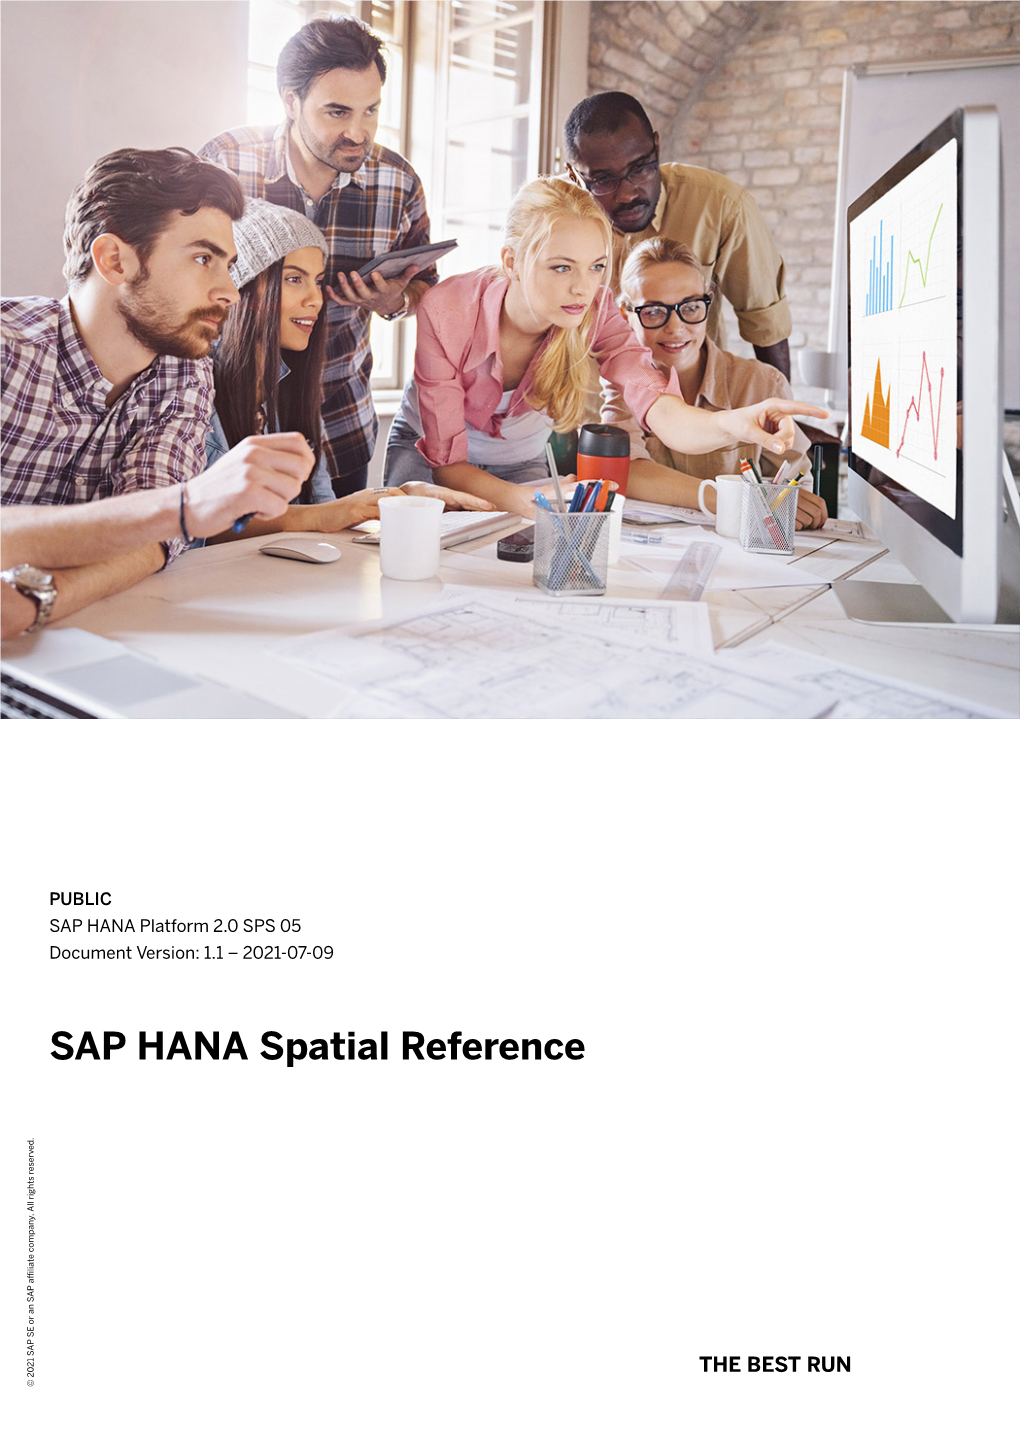 SAP HANA Spatial Reference Company